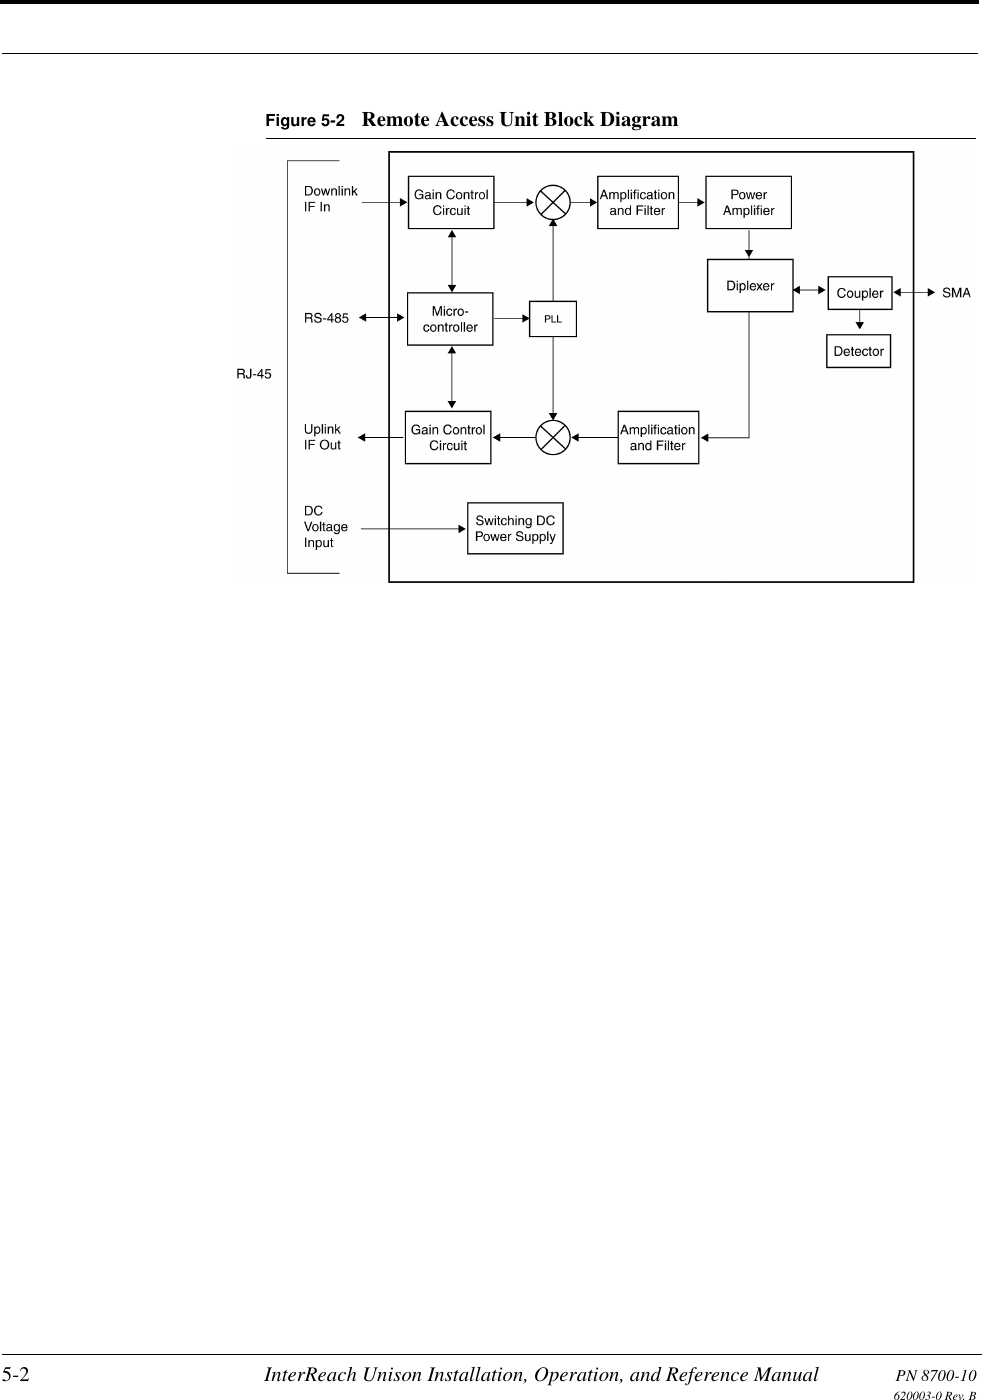 5-2 InterReach Unison Installation, Operation, and Reference Manual PN 8700-10620003-0 Rev. BFigure 5-2 Remote Access Unit Block Diagram